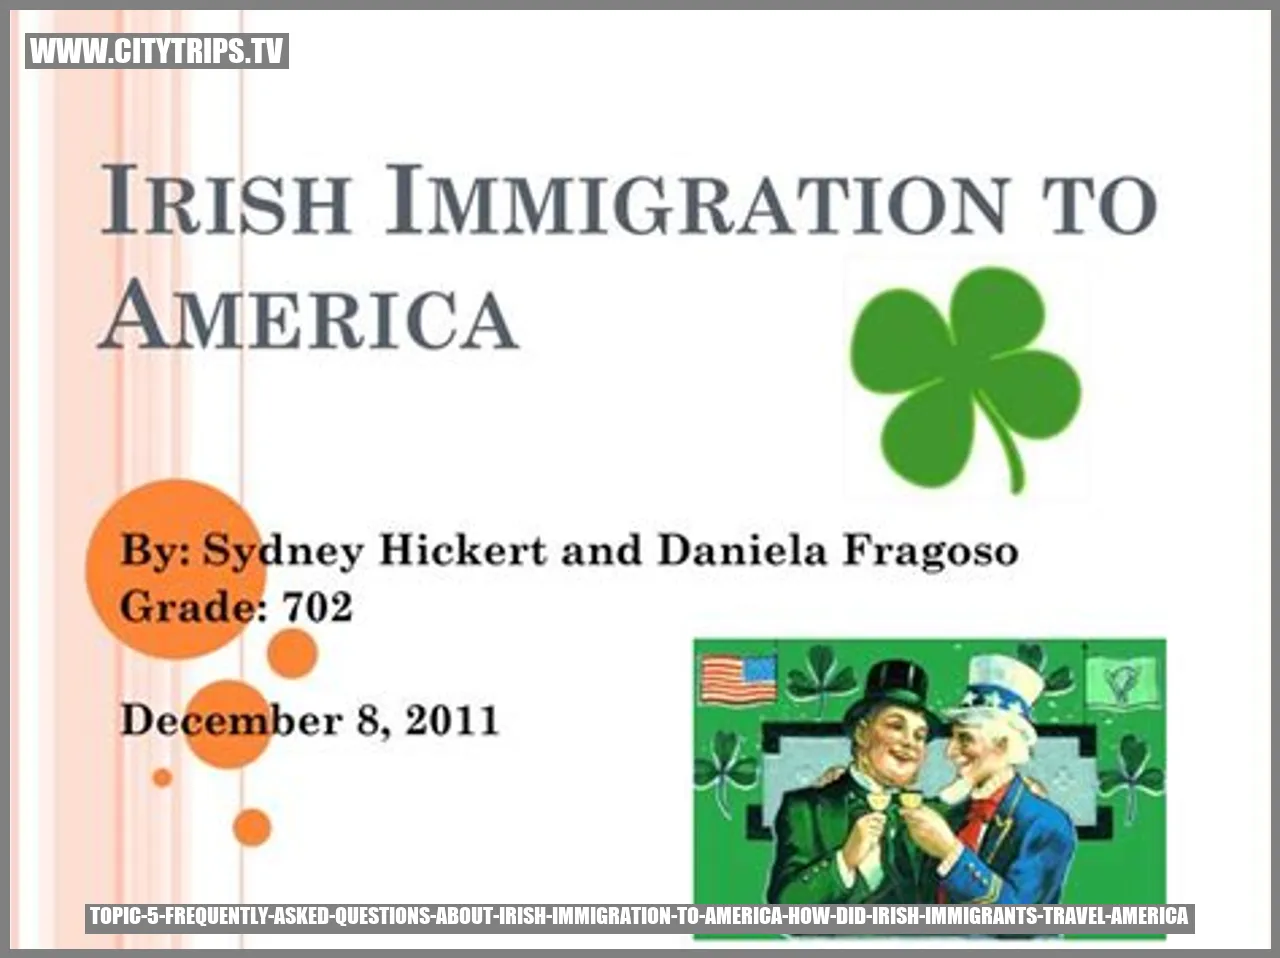 Irish Immigration to America